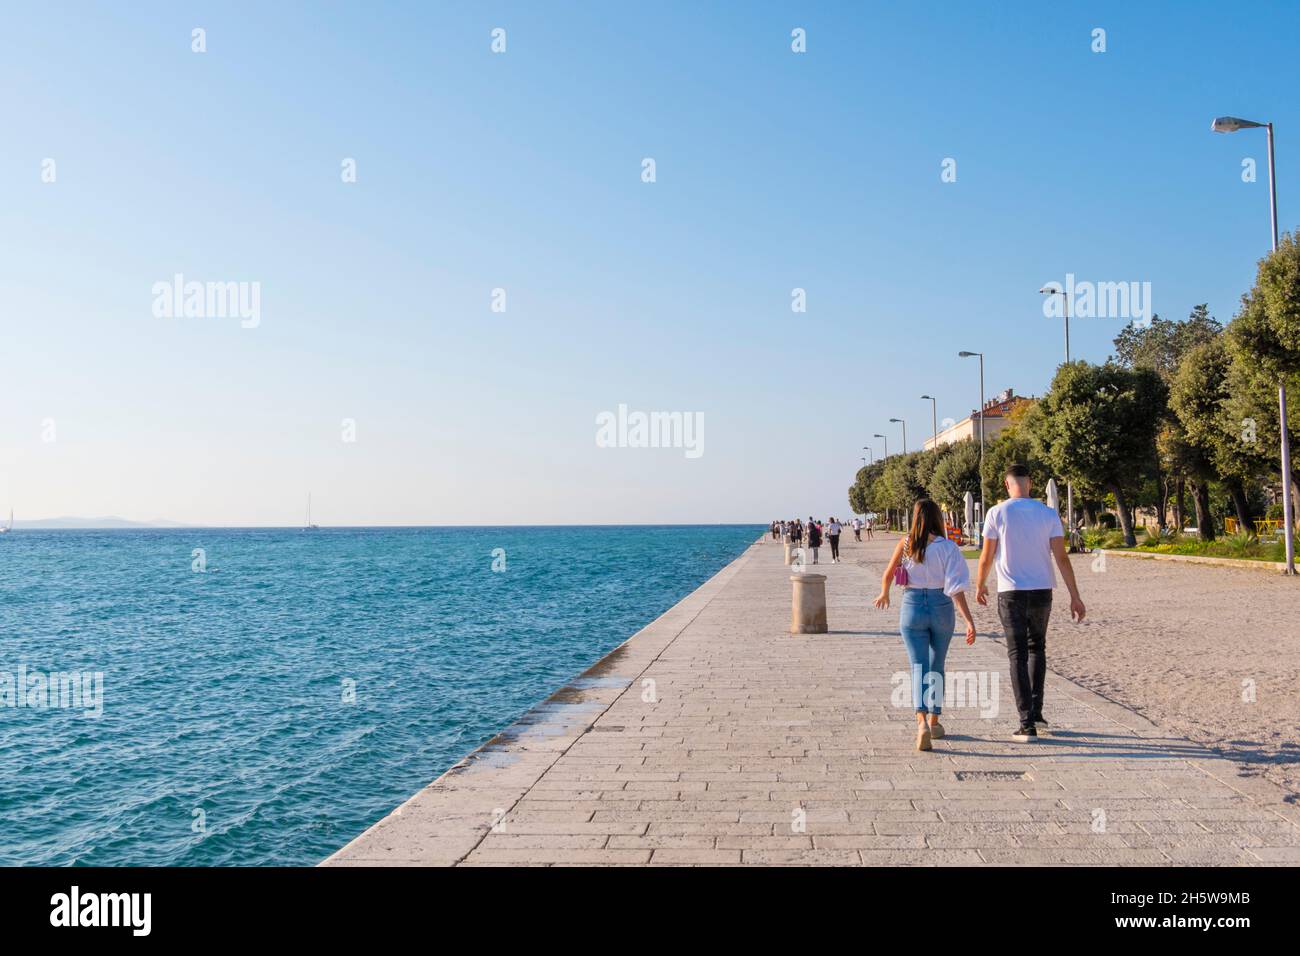 Obala kralja Petra Krešimira IV, promenade en bord de mer, vieille ville, Zadar, Croatie Banque D'Images